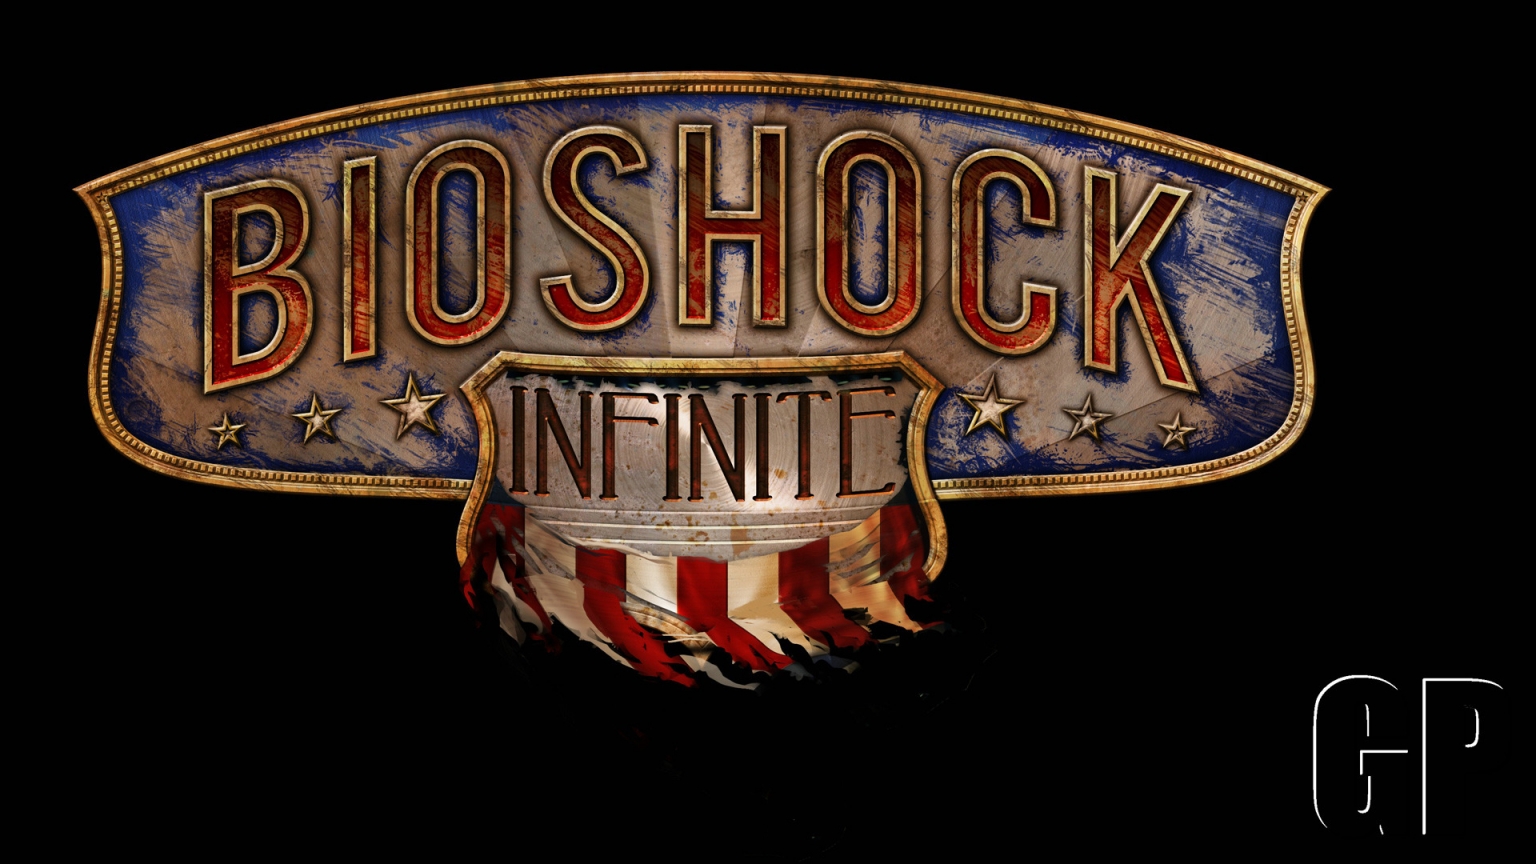 BioShock Infinite for 1536 x 864 HDTV resolution